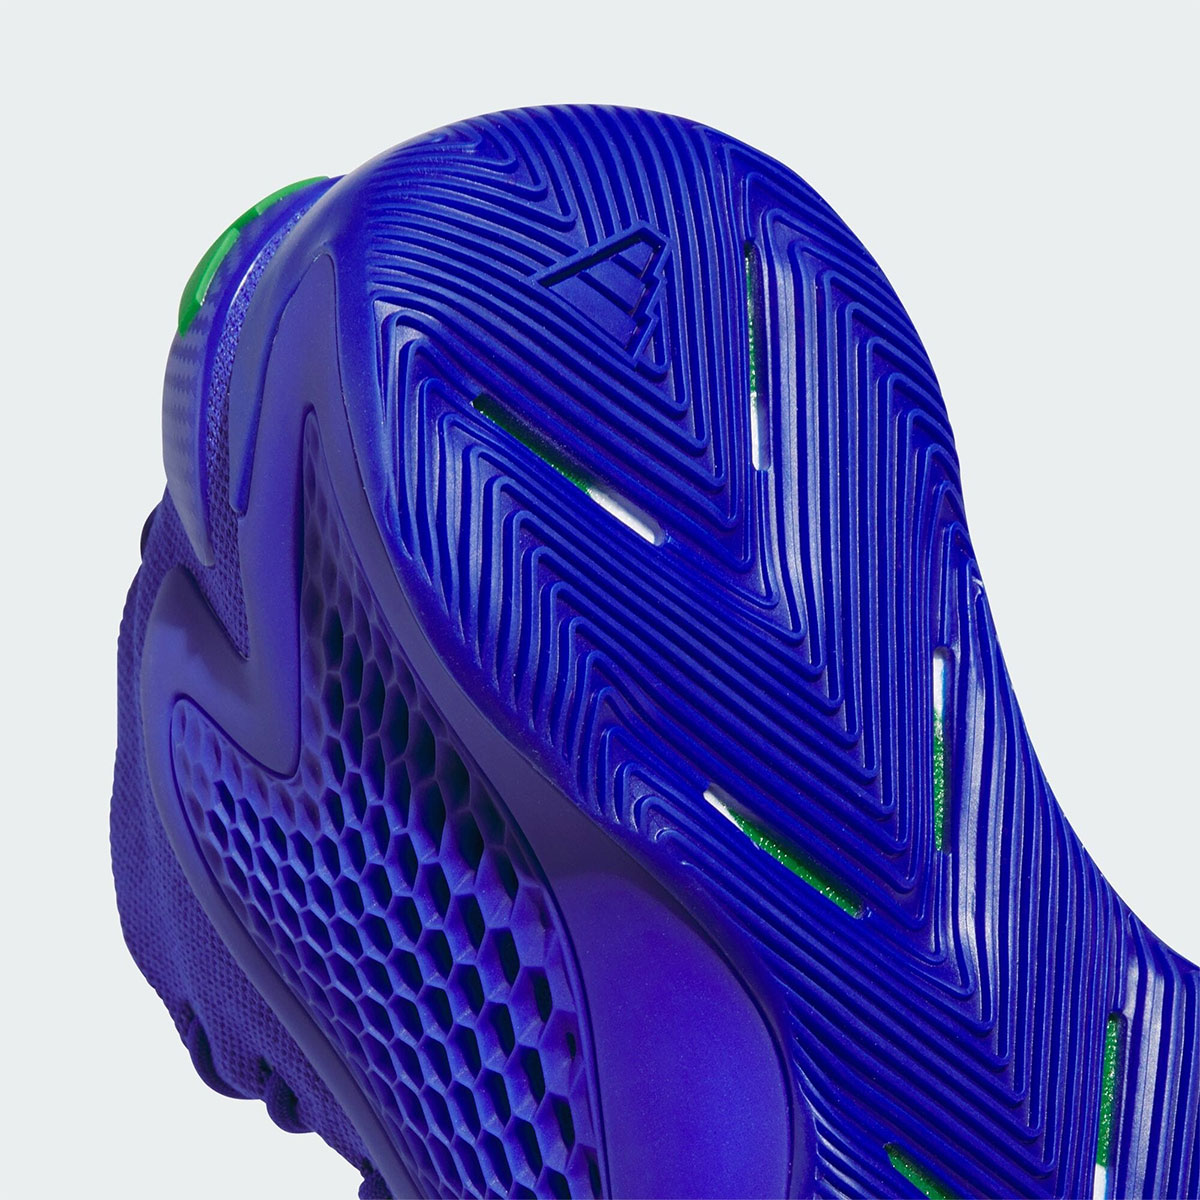 Adidas Ae1 Chaussures adidas Originals Forum Low W FZ5946 Ftwwht Prptnt Blilil Velocity Blue If1864 8